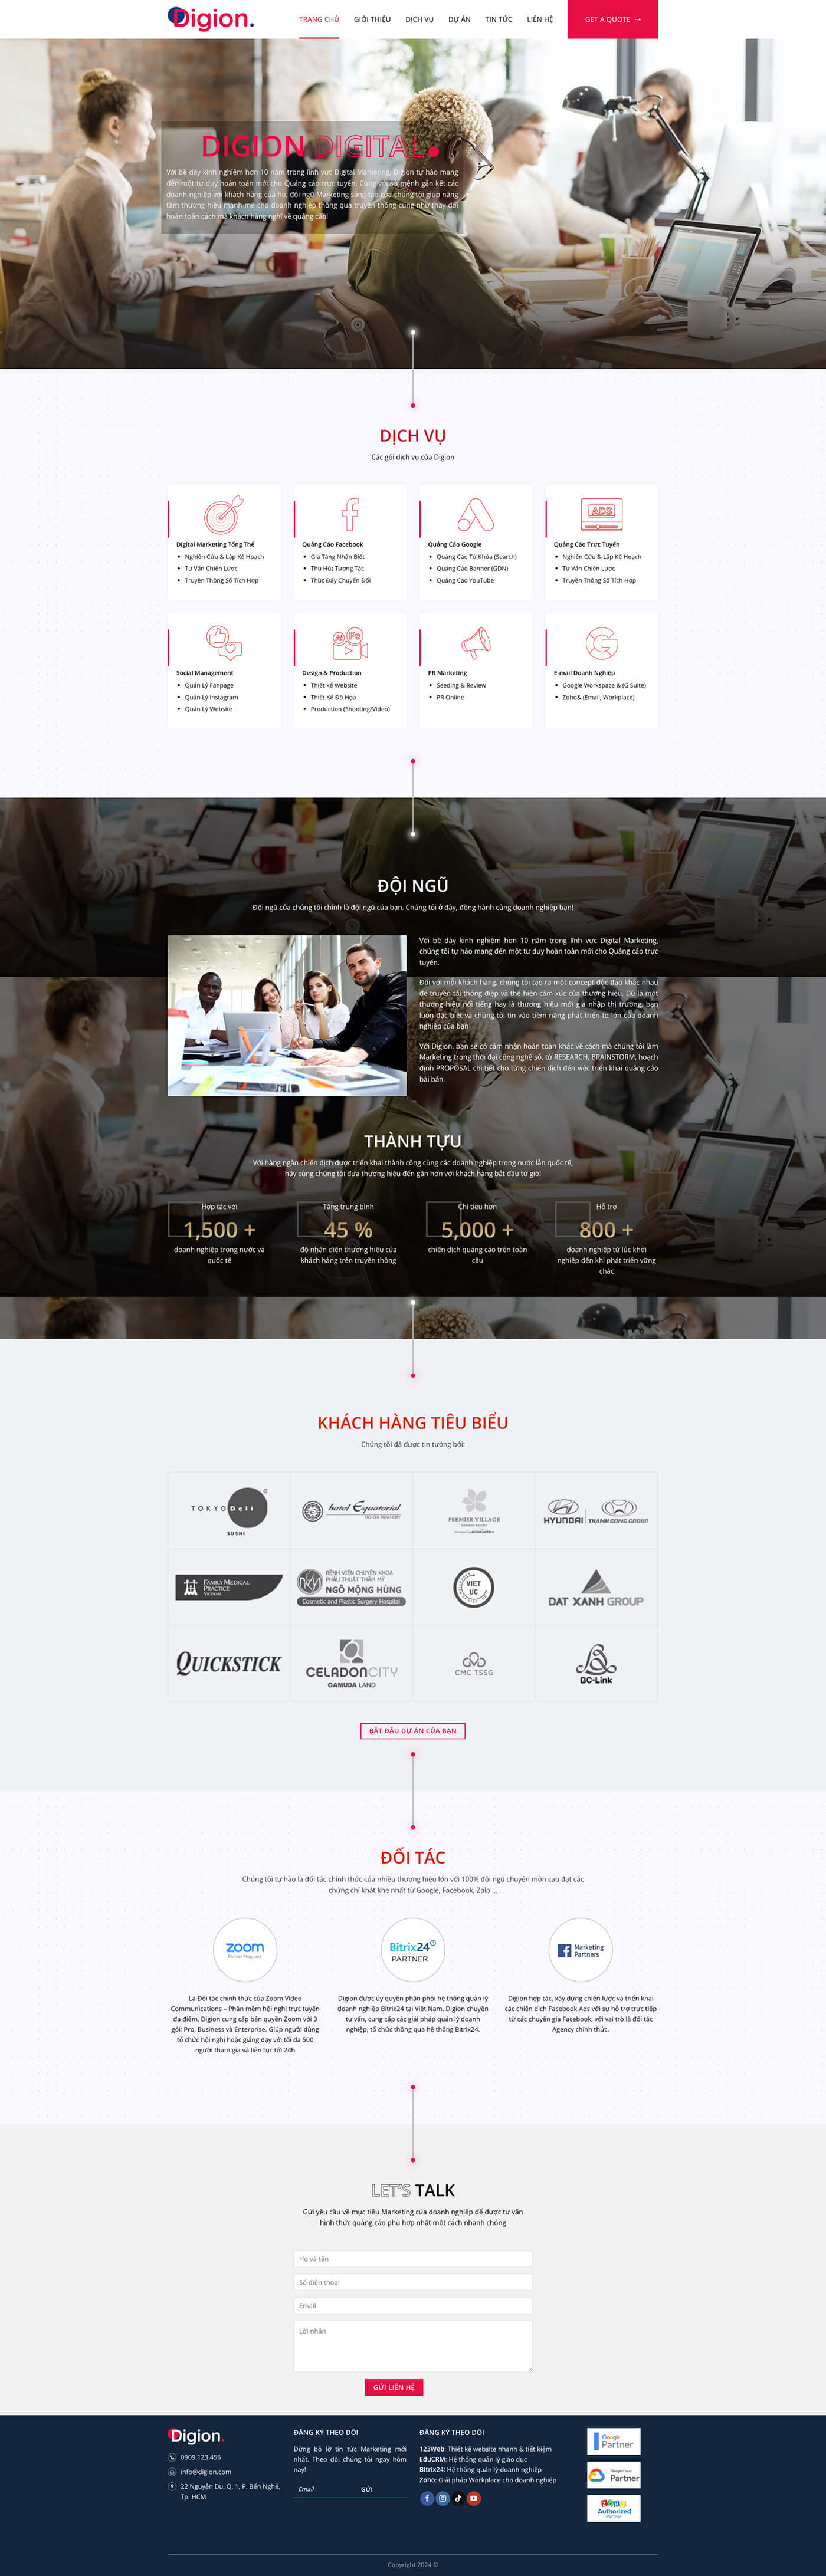 Theme website Agency Digital Marketing Online